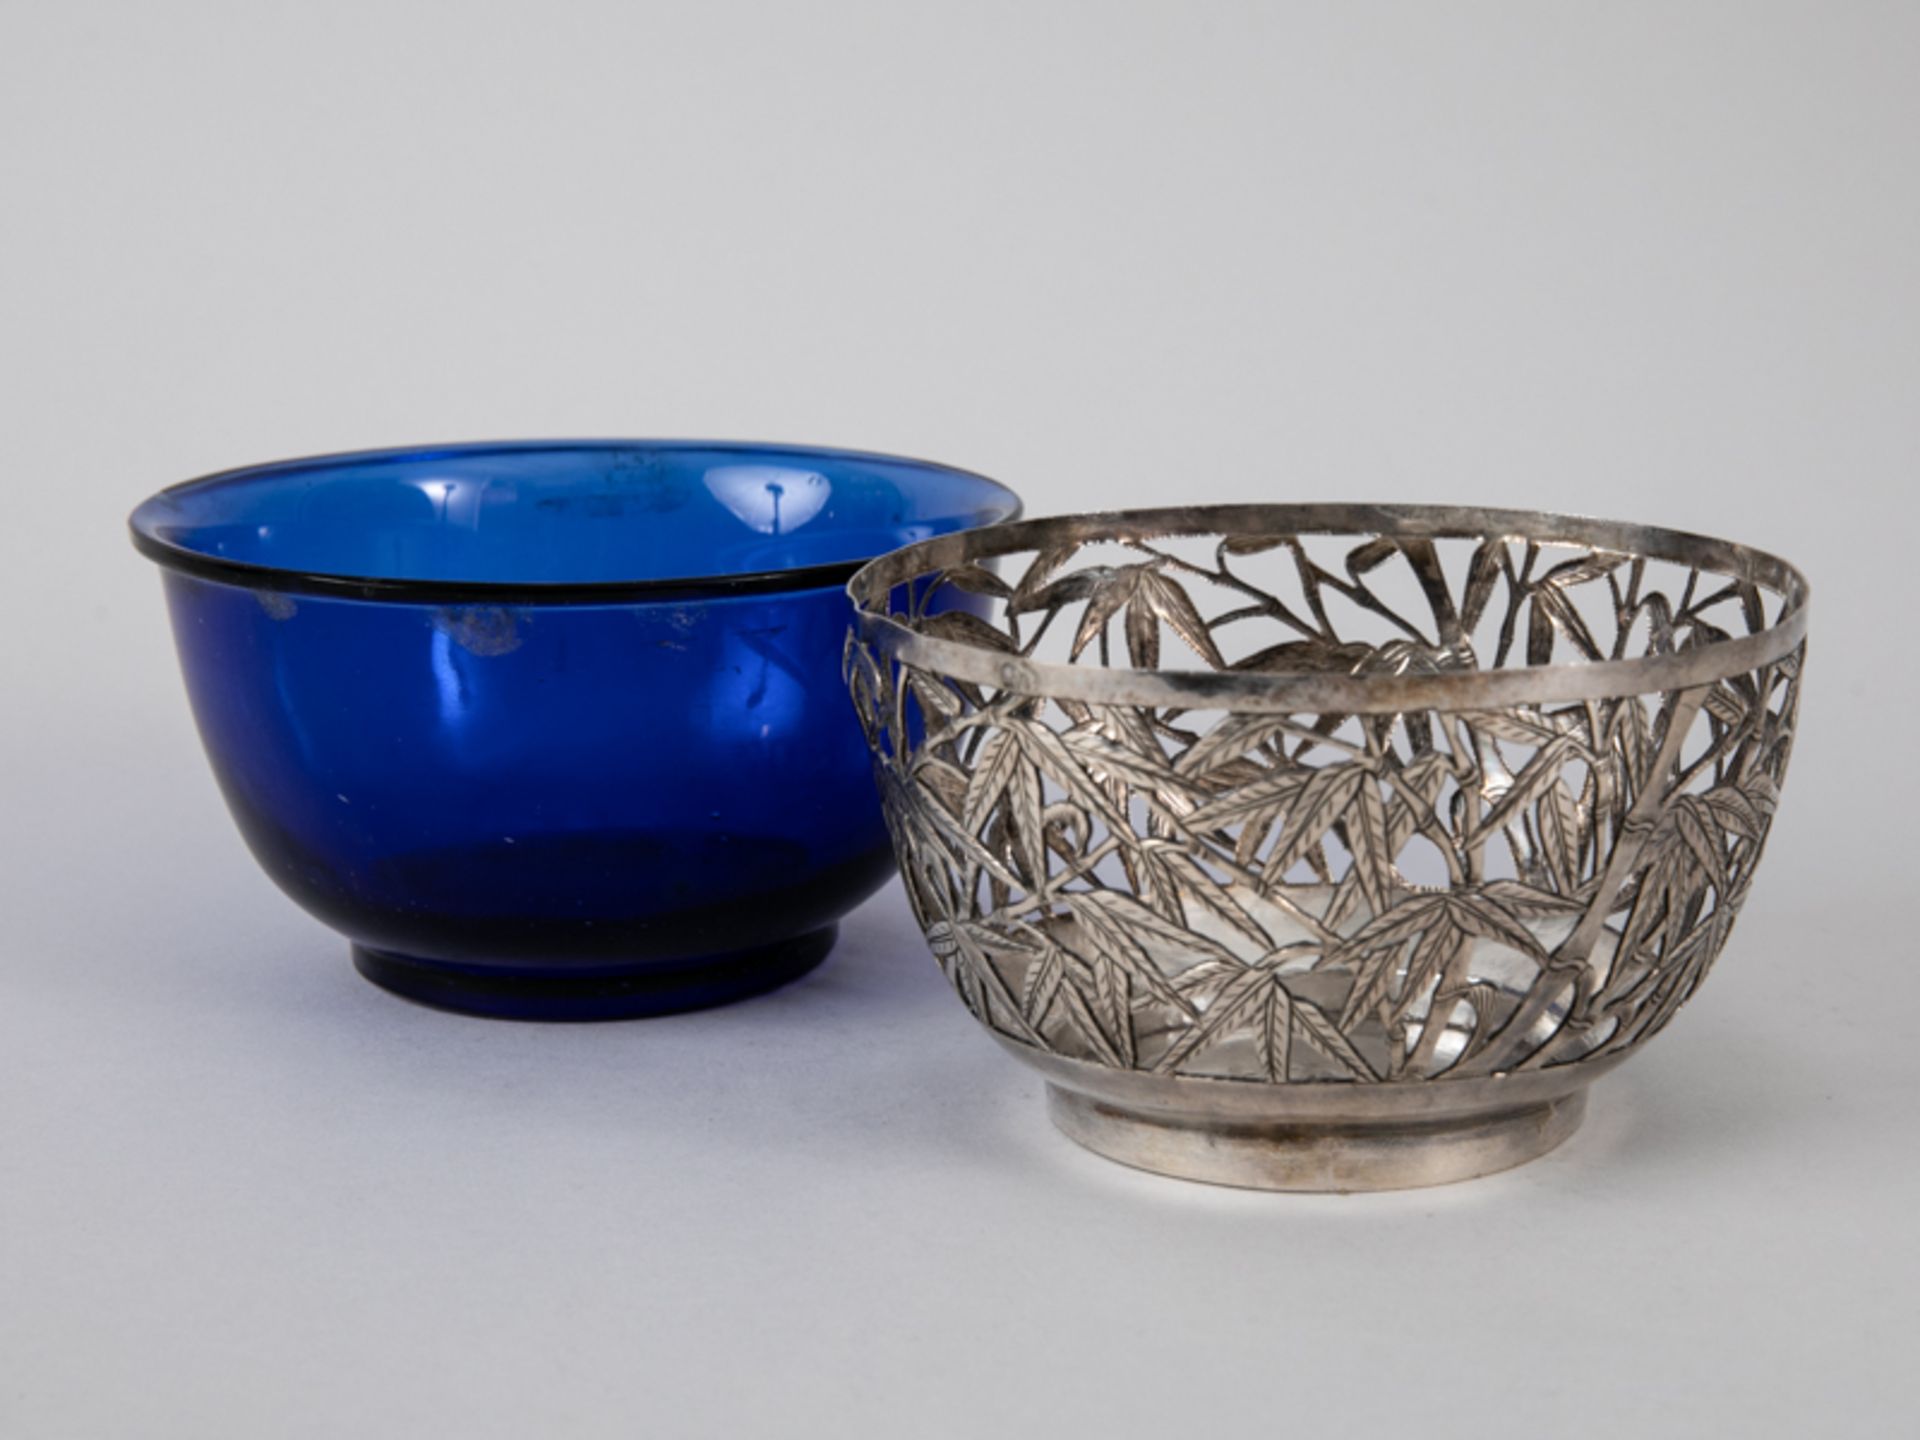 Pekingglas-Schale + Silber, China, 18. Jh./ um 1900. Blaues Pekingglas (18. Jh.) und filigrane - Bild 2 aus 3